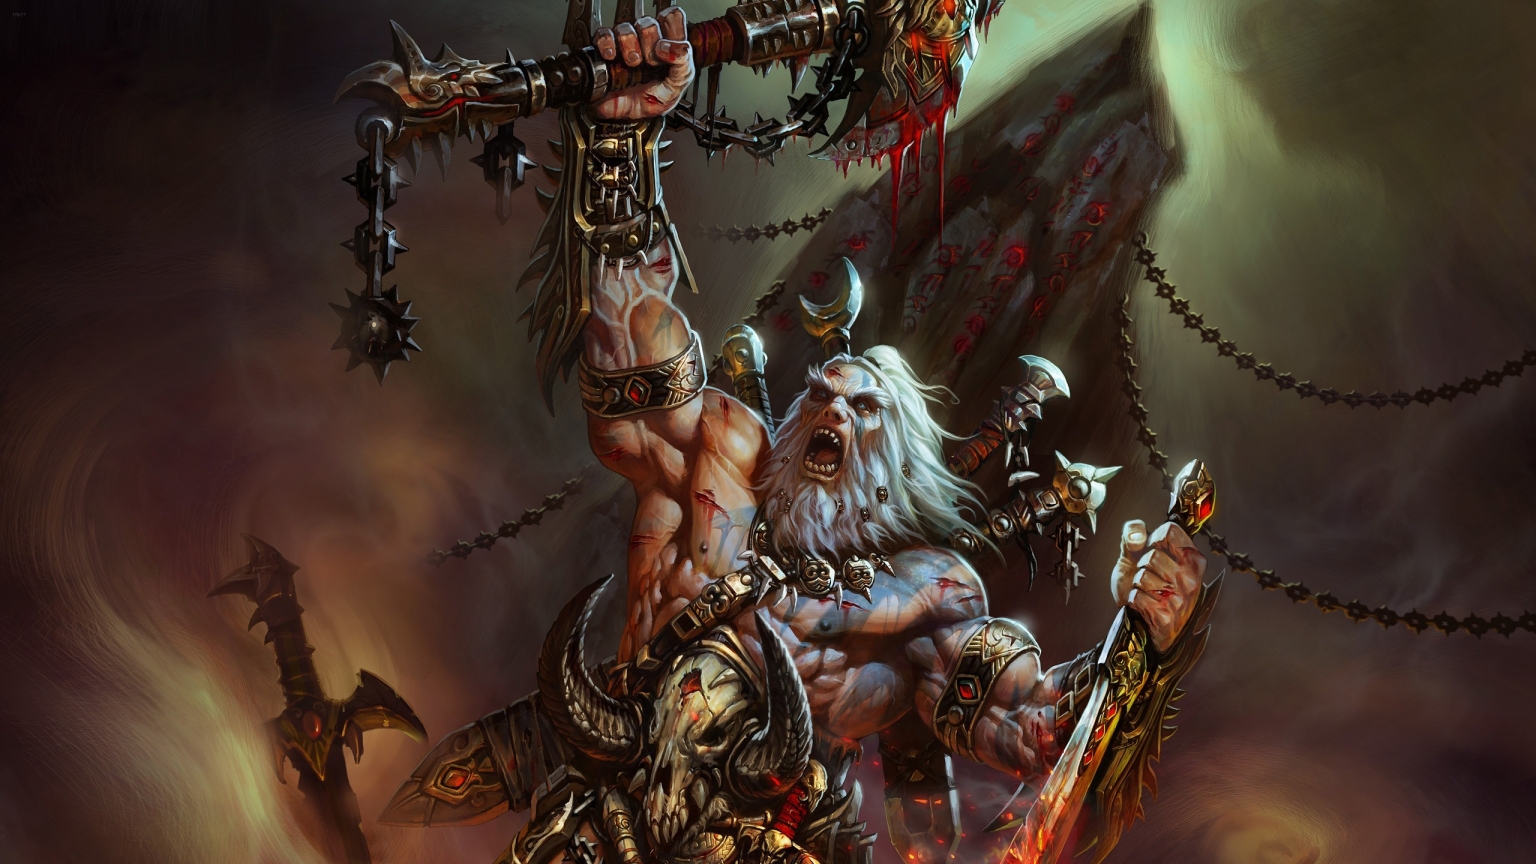 Diablo 3 - The Barbarian for 1536 x 864 HDTV resolution